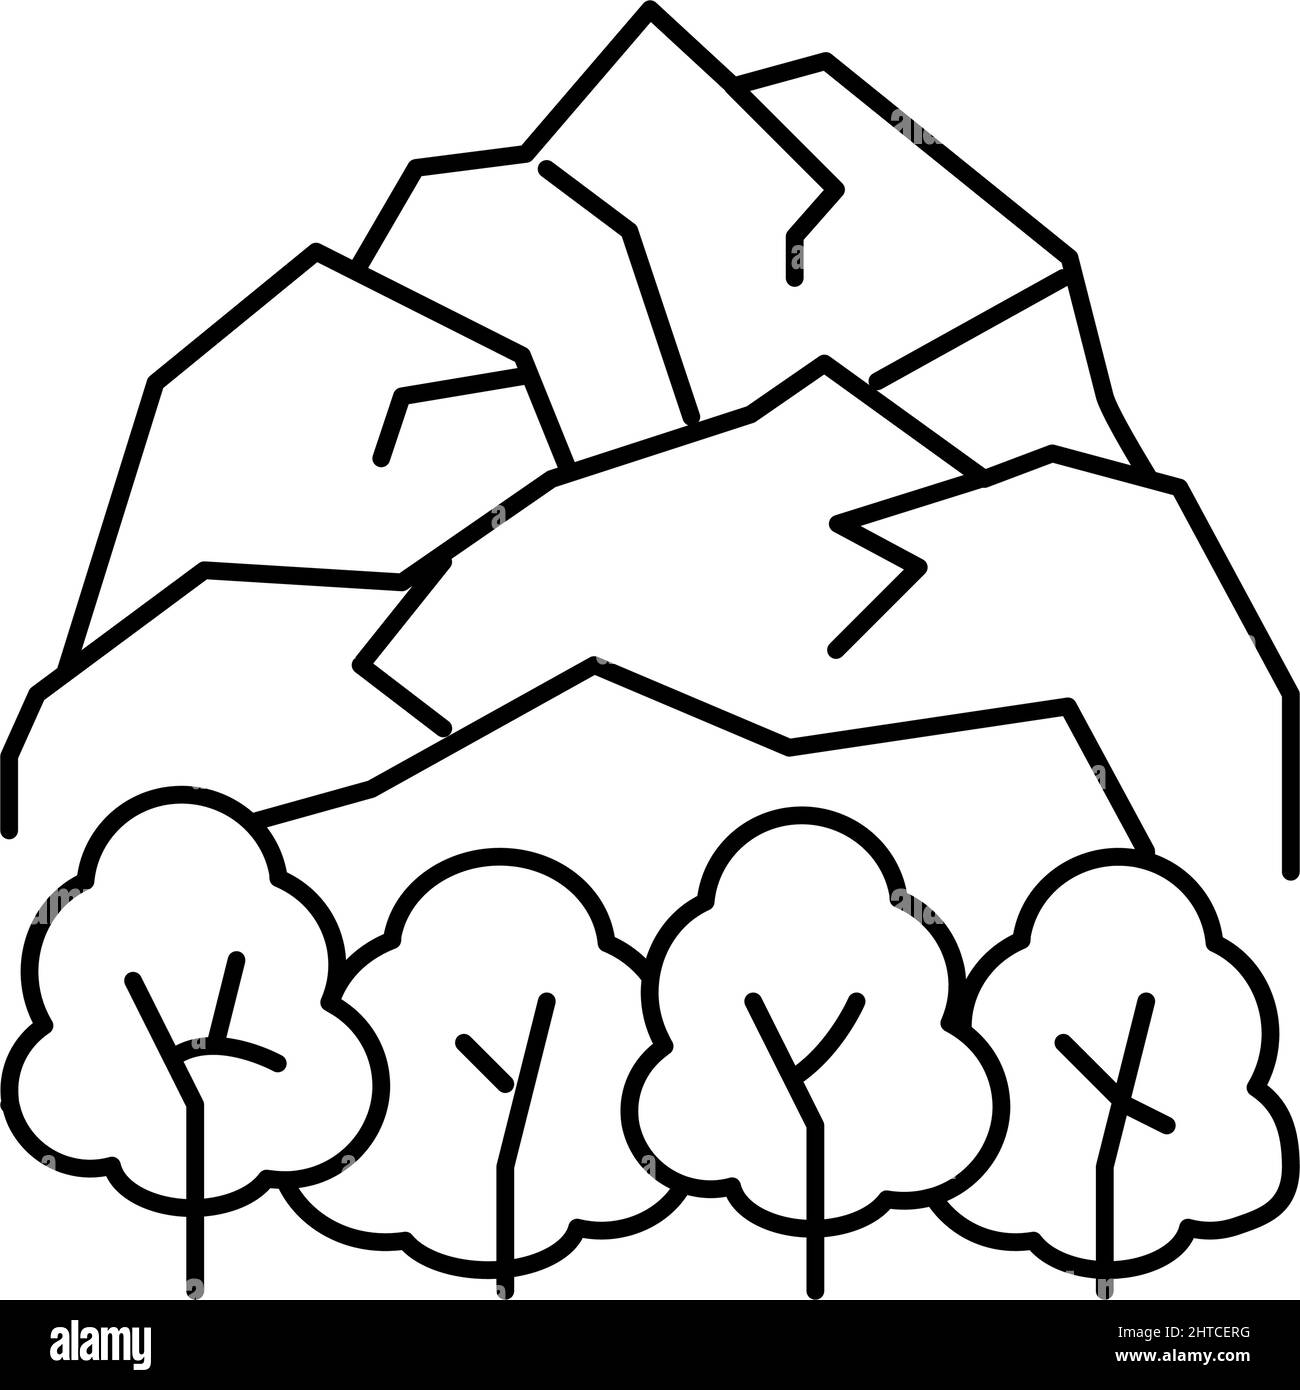 Vektorgrafik für Symbole der Tundra-Landscape-Linie Stock Vektor